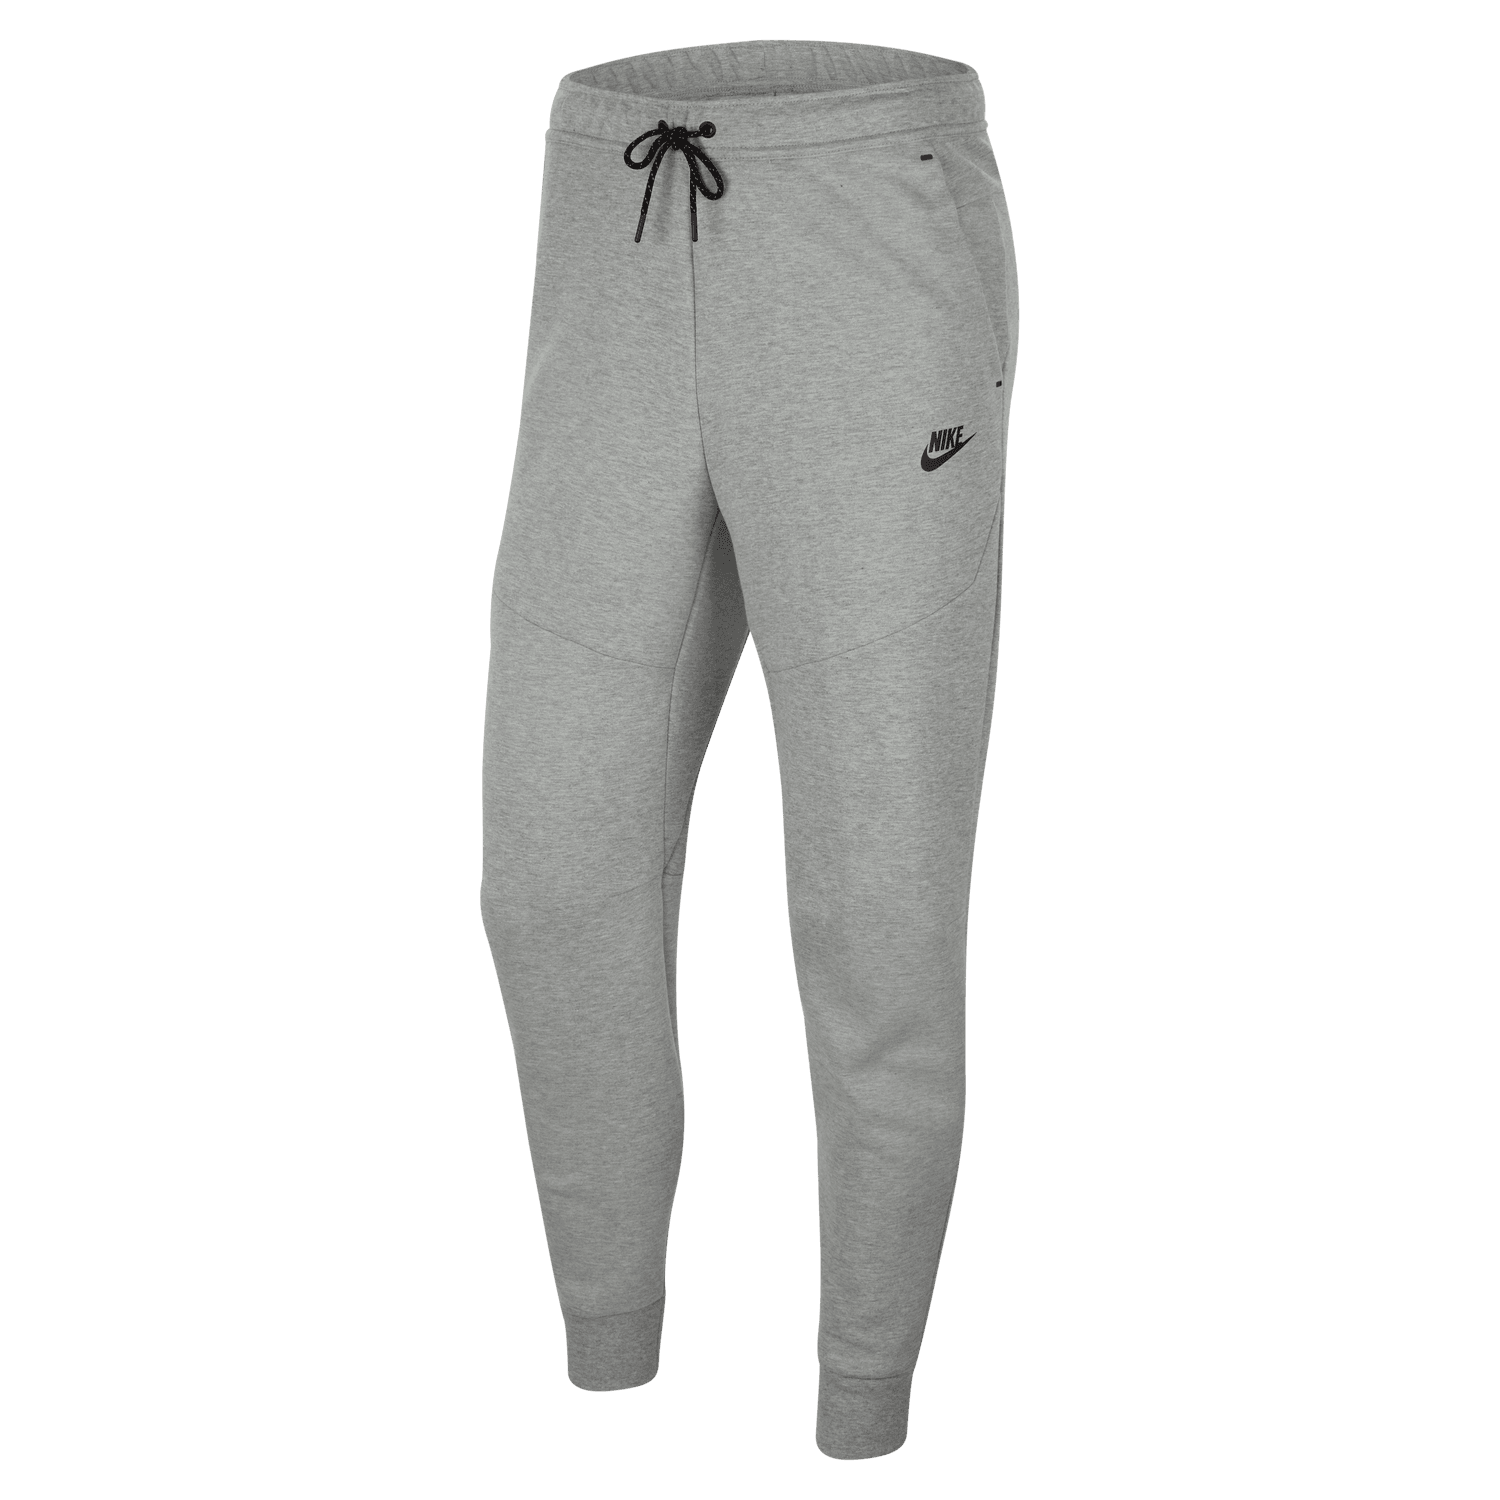 Grey Tech Fleece Joggers & Sweatpants.